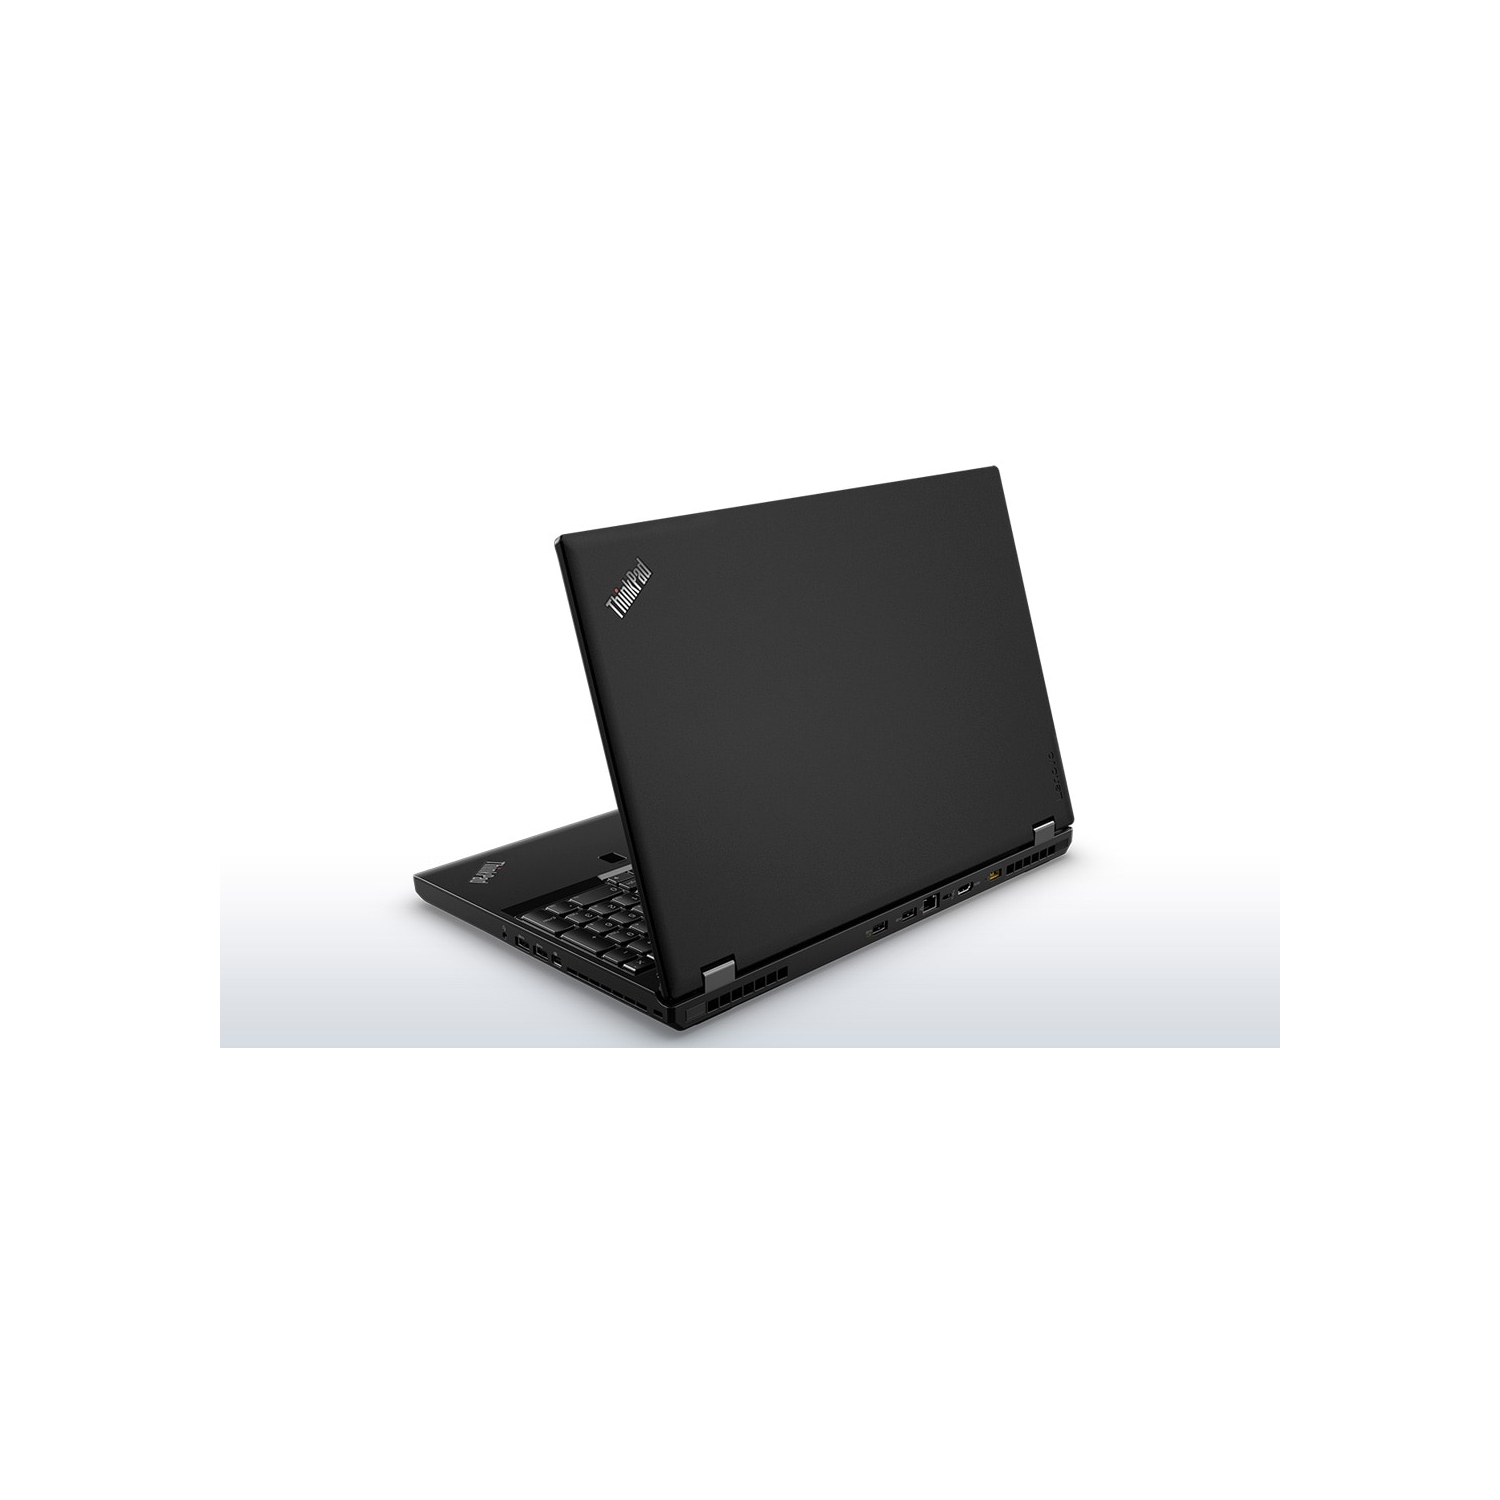 Refurbished (Fair) - Lenovo ThinkPad P50 15.6" Screen Laptop (Intel Core i7-6820HQ, 32GB RAM, 512GB SSD)